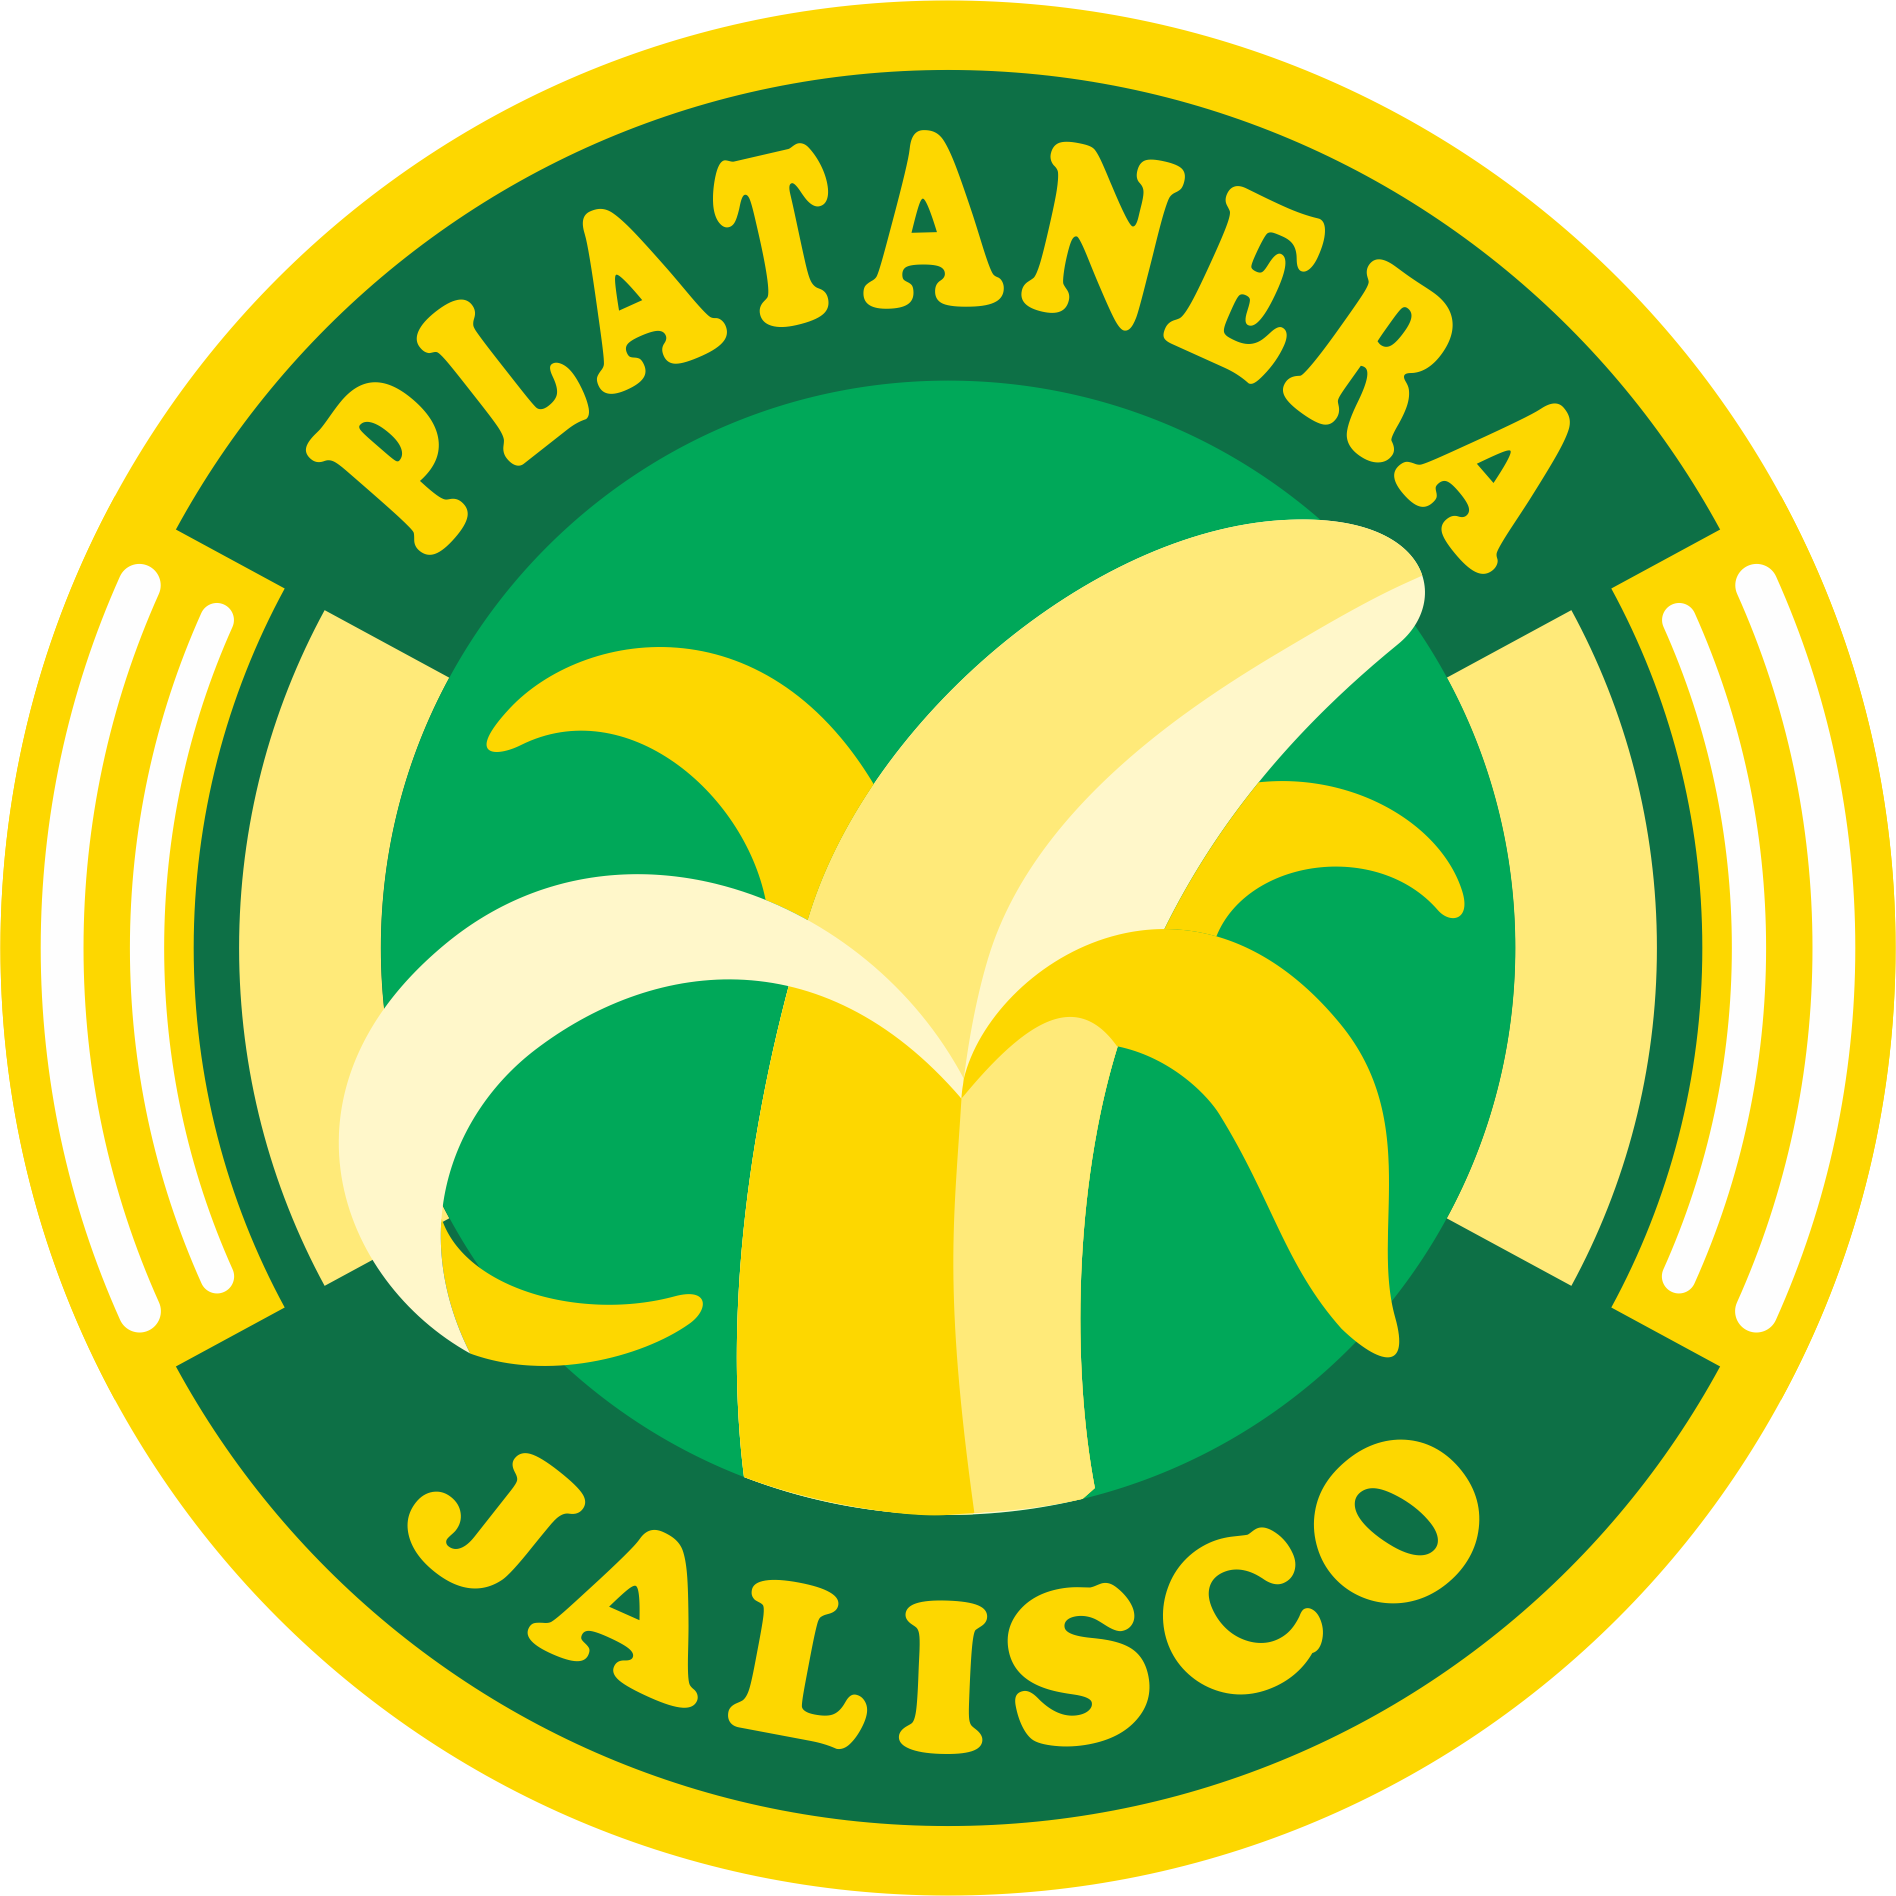 Platanera Jalisco